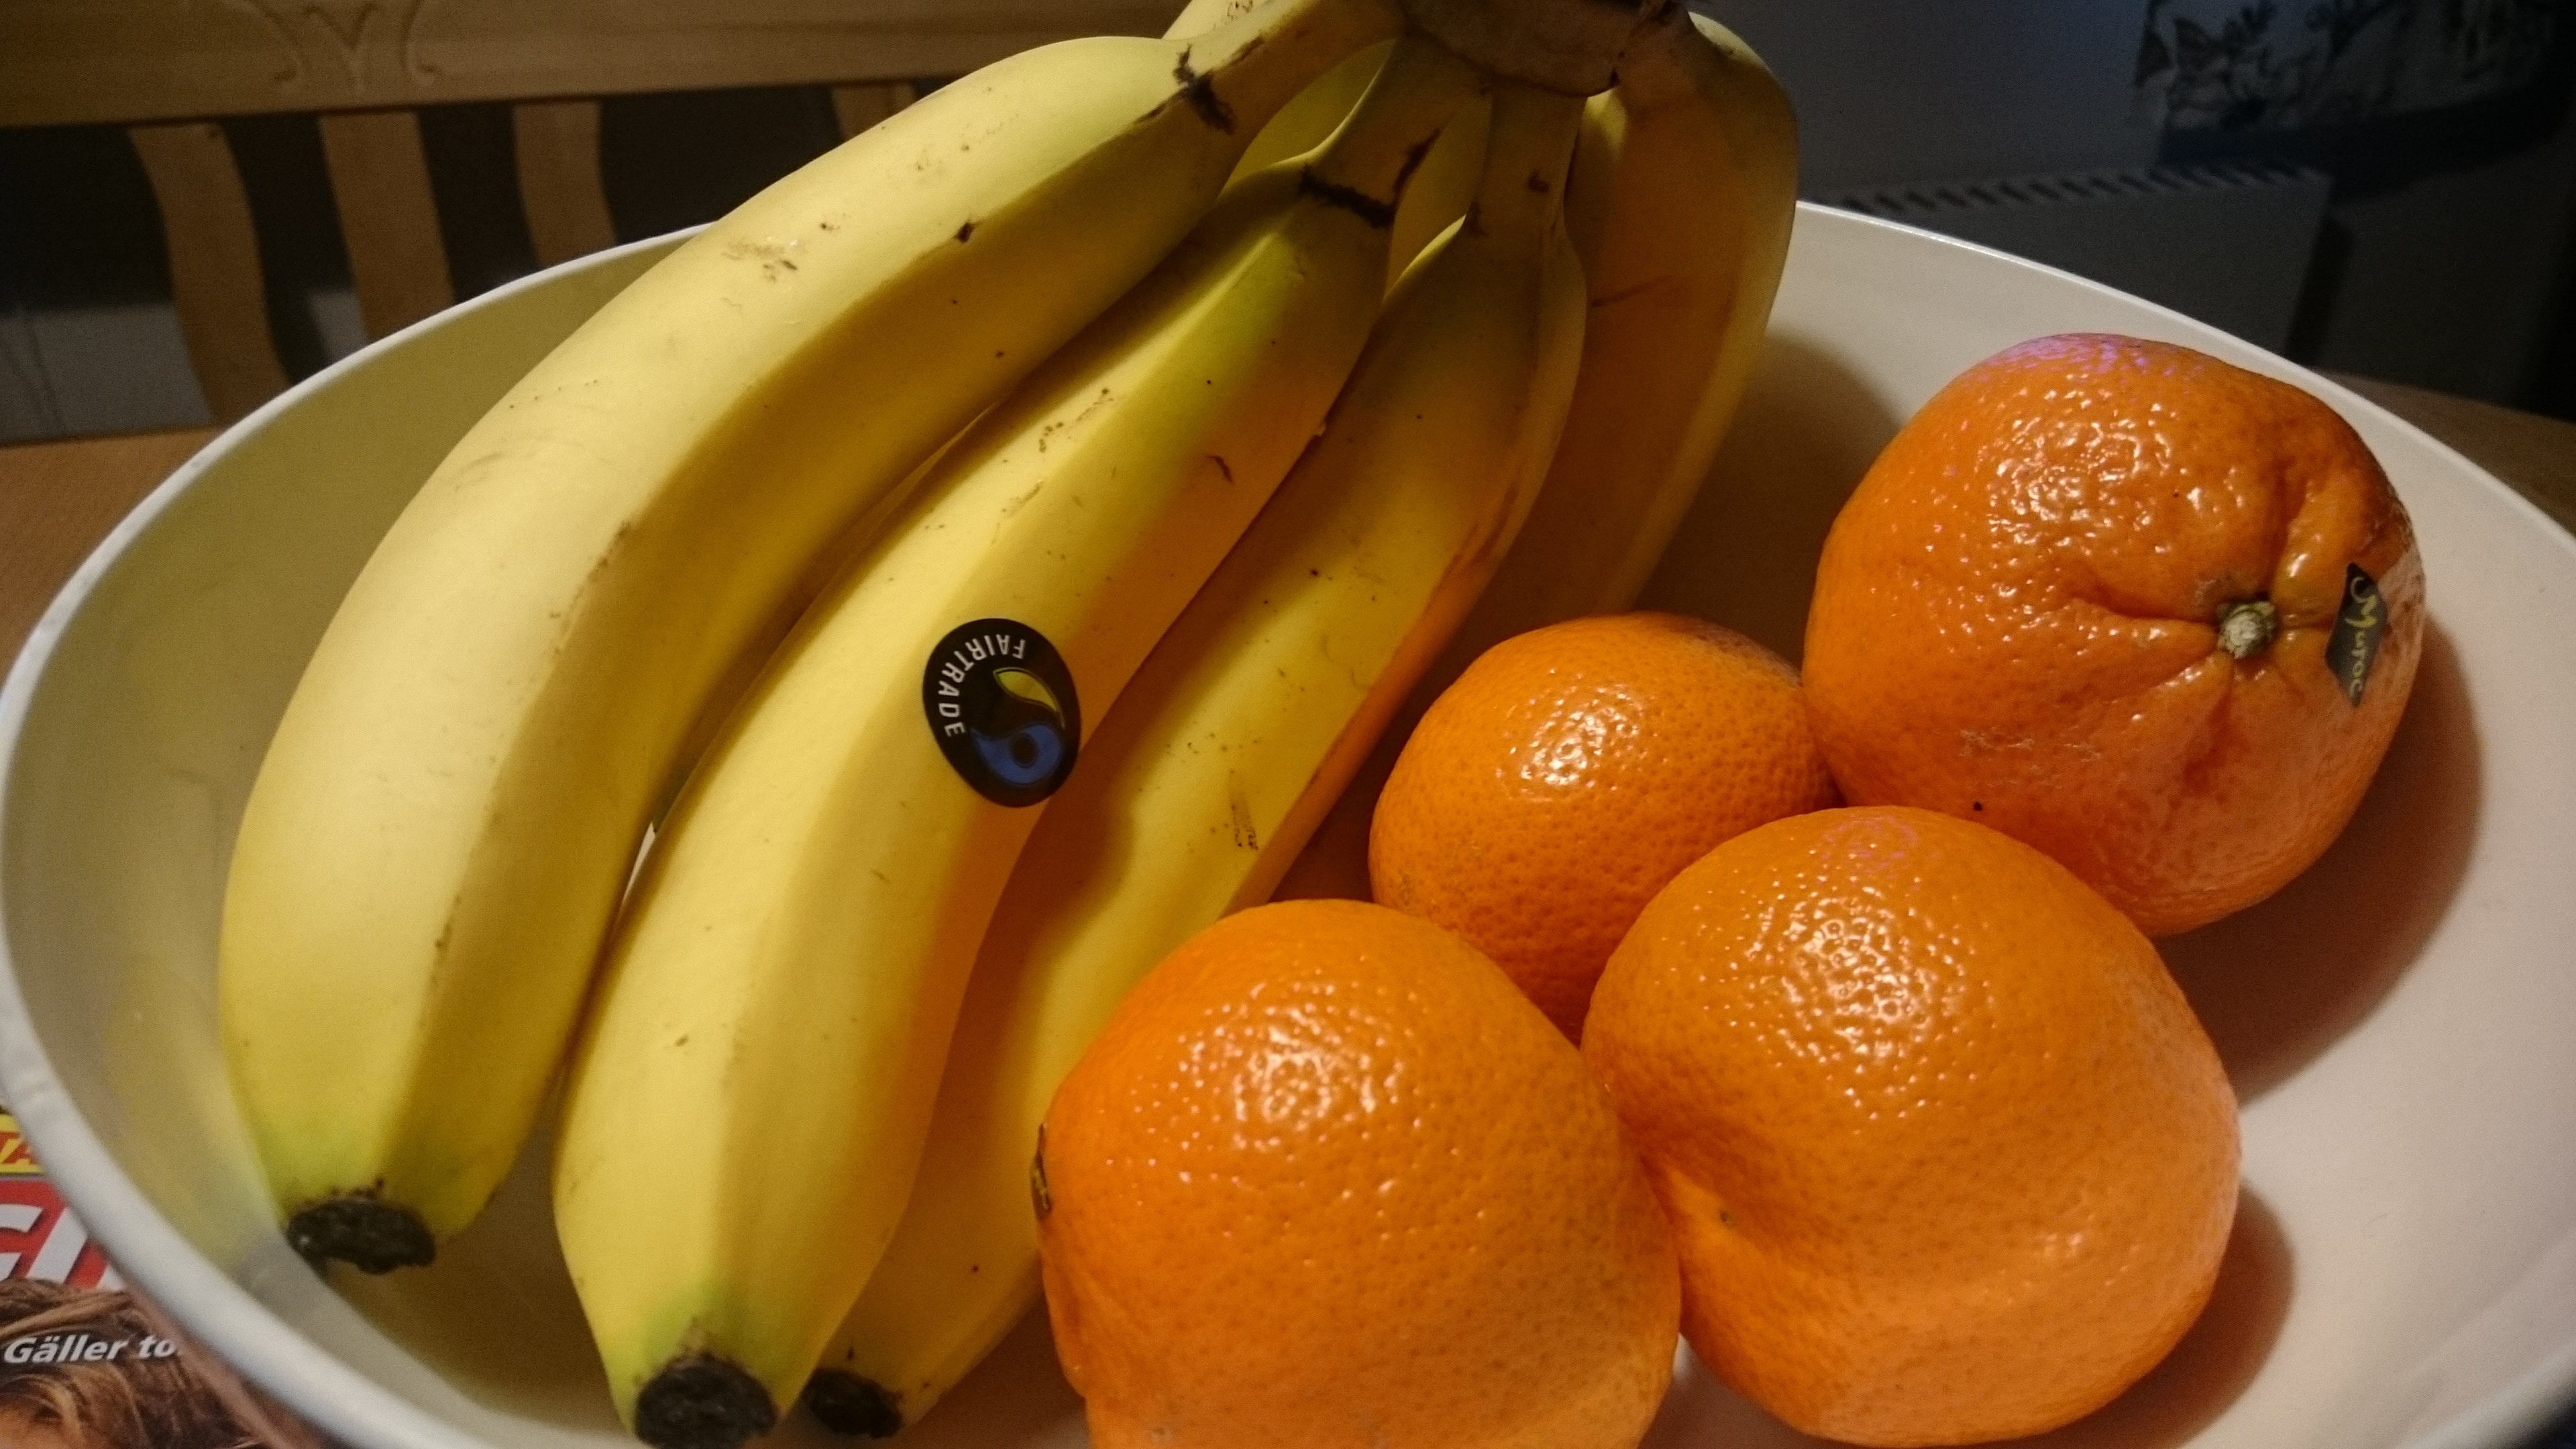 yellow banana and oranges fruit